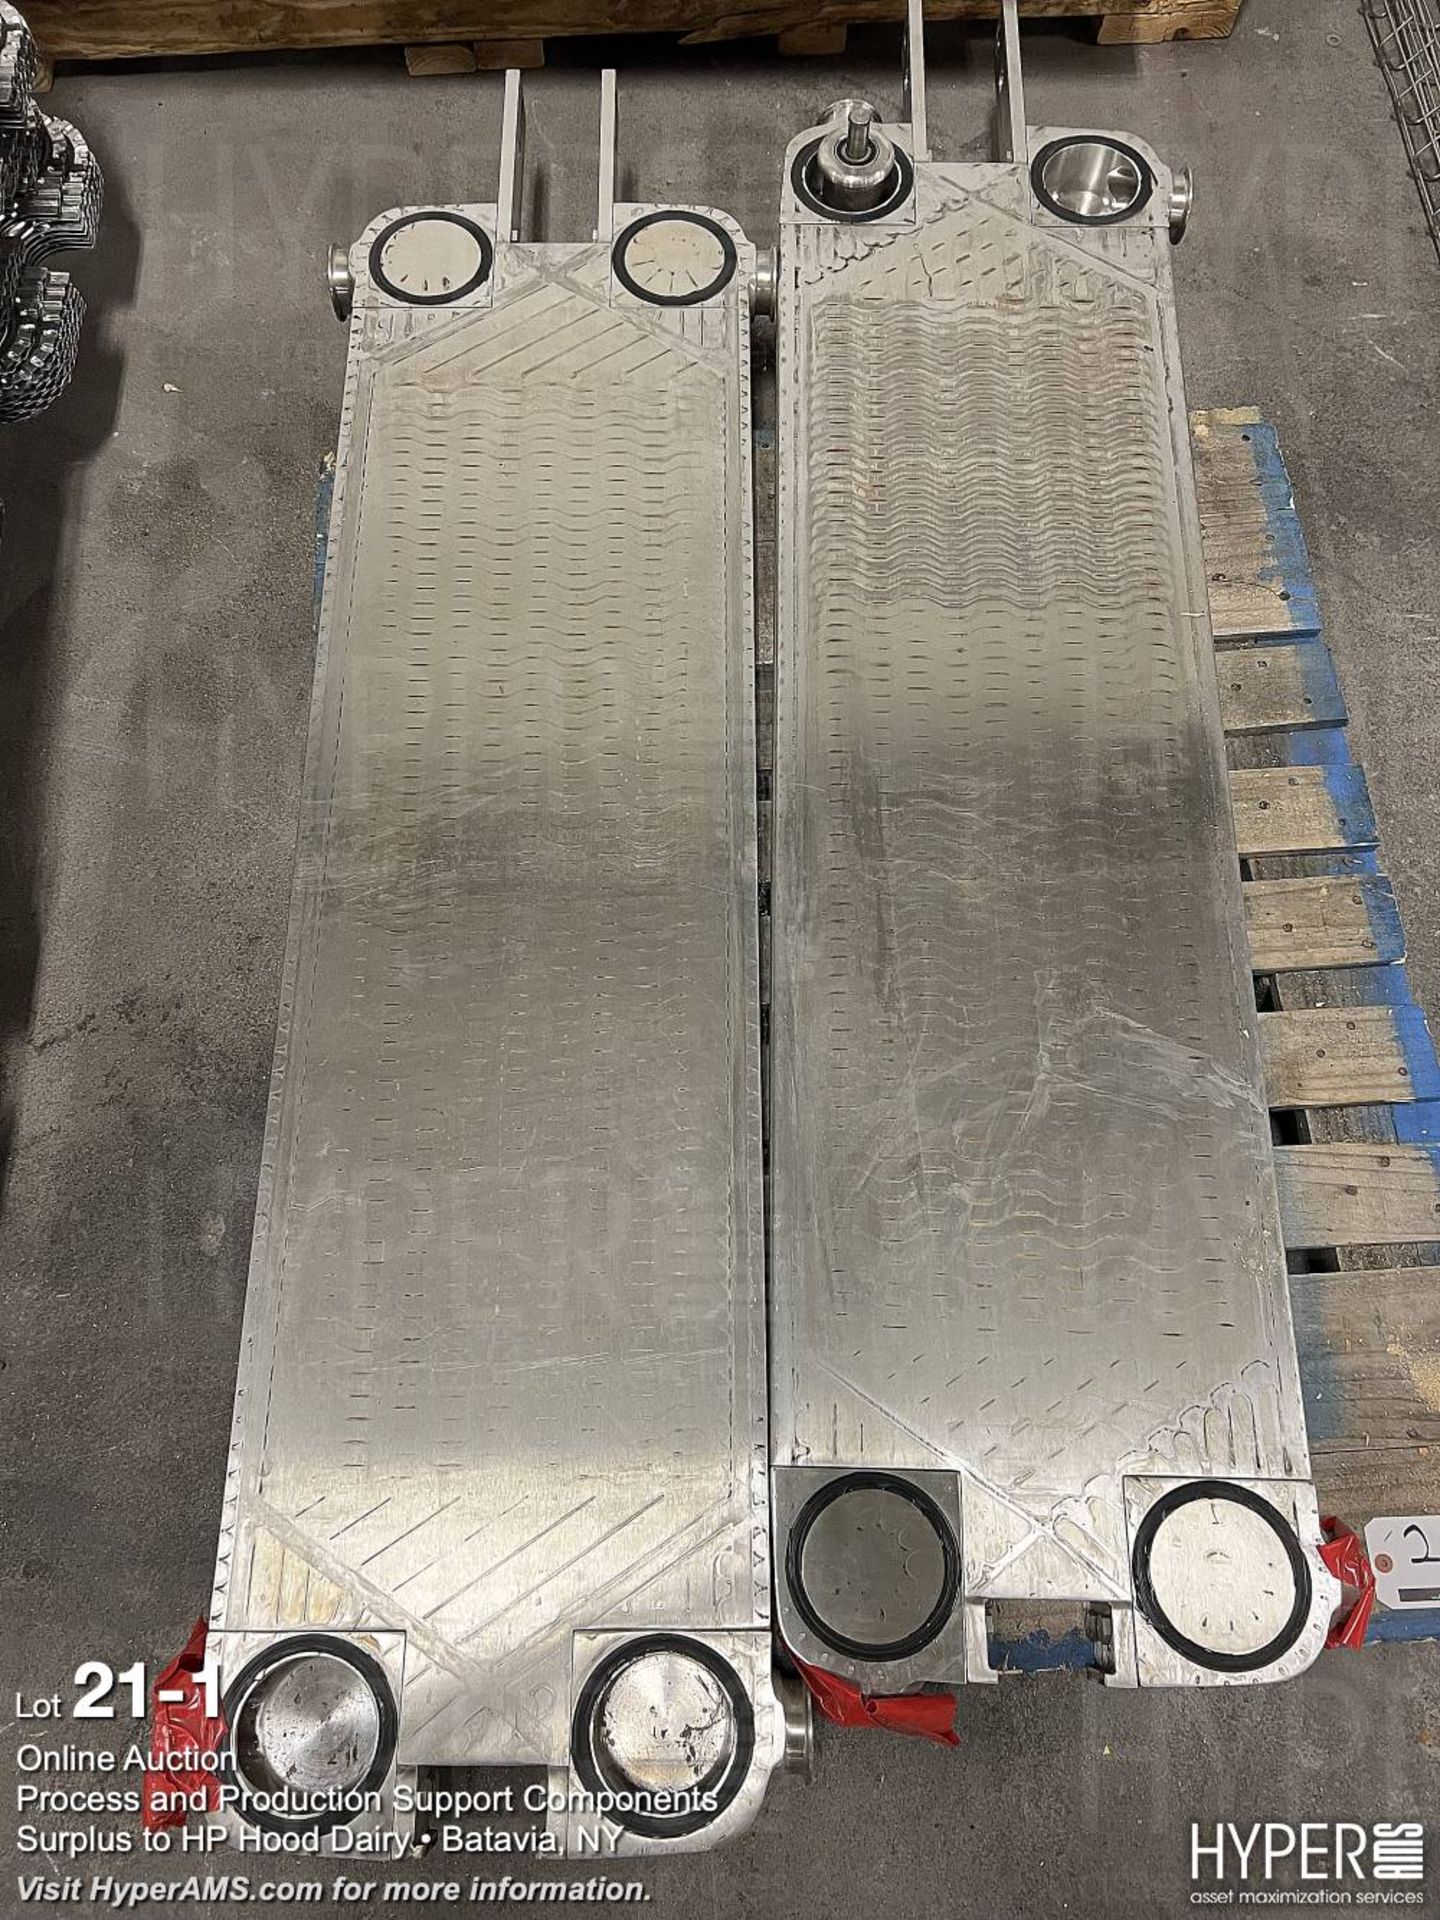 Heat exchanger end plates